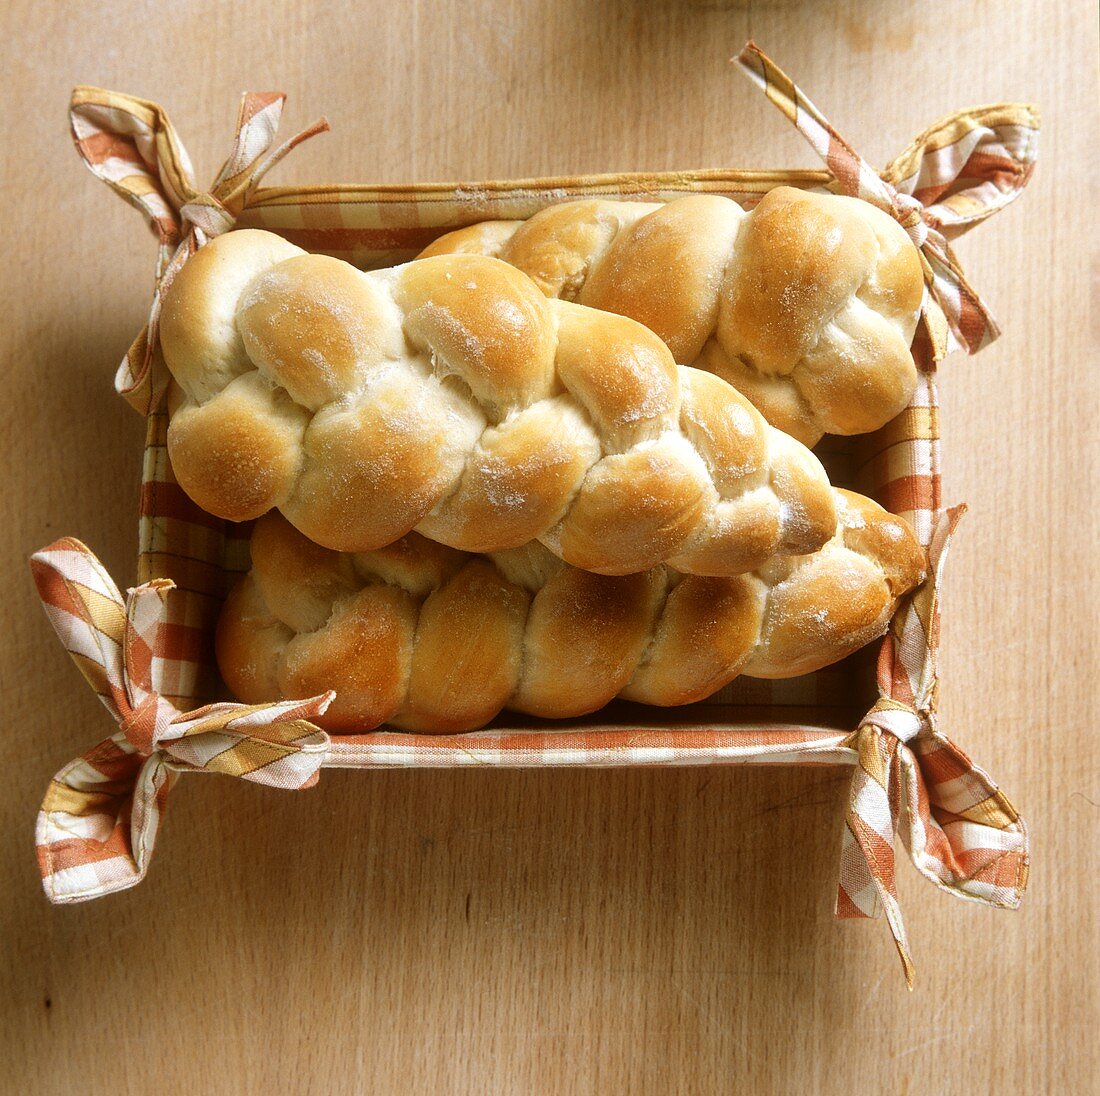 Bread plaits in decorative bread basket